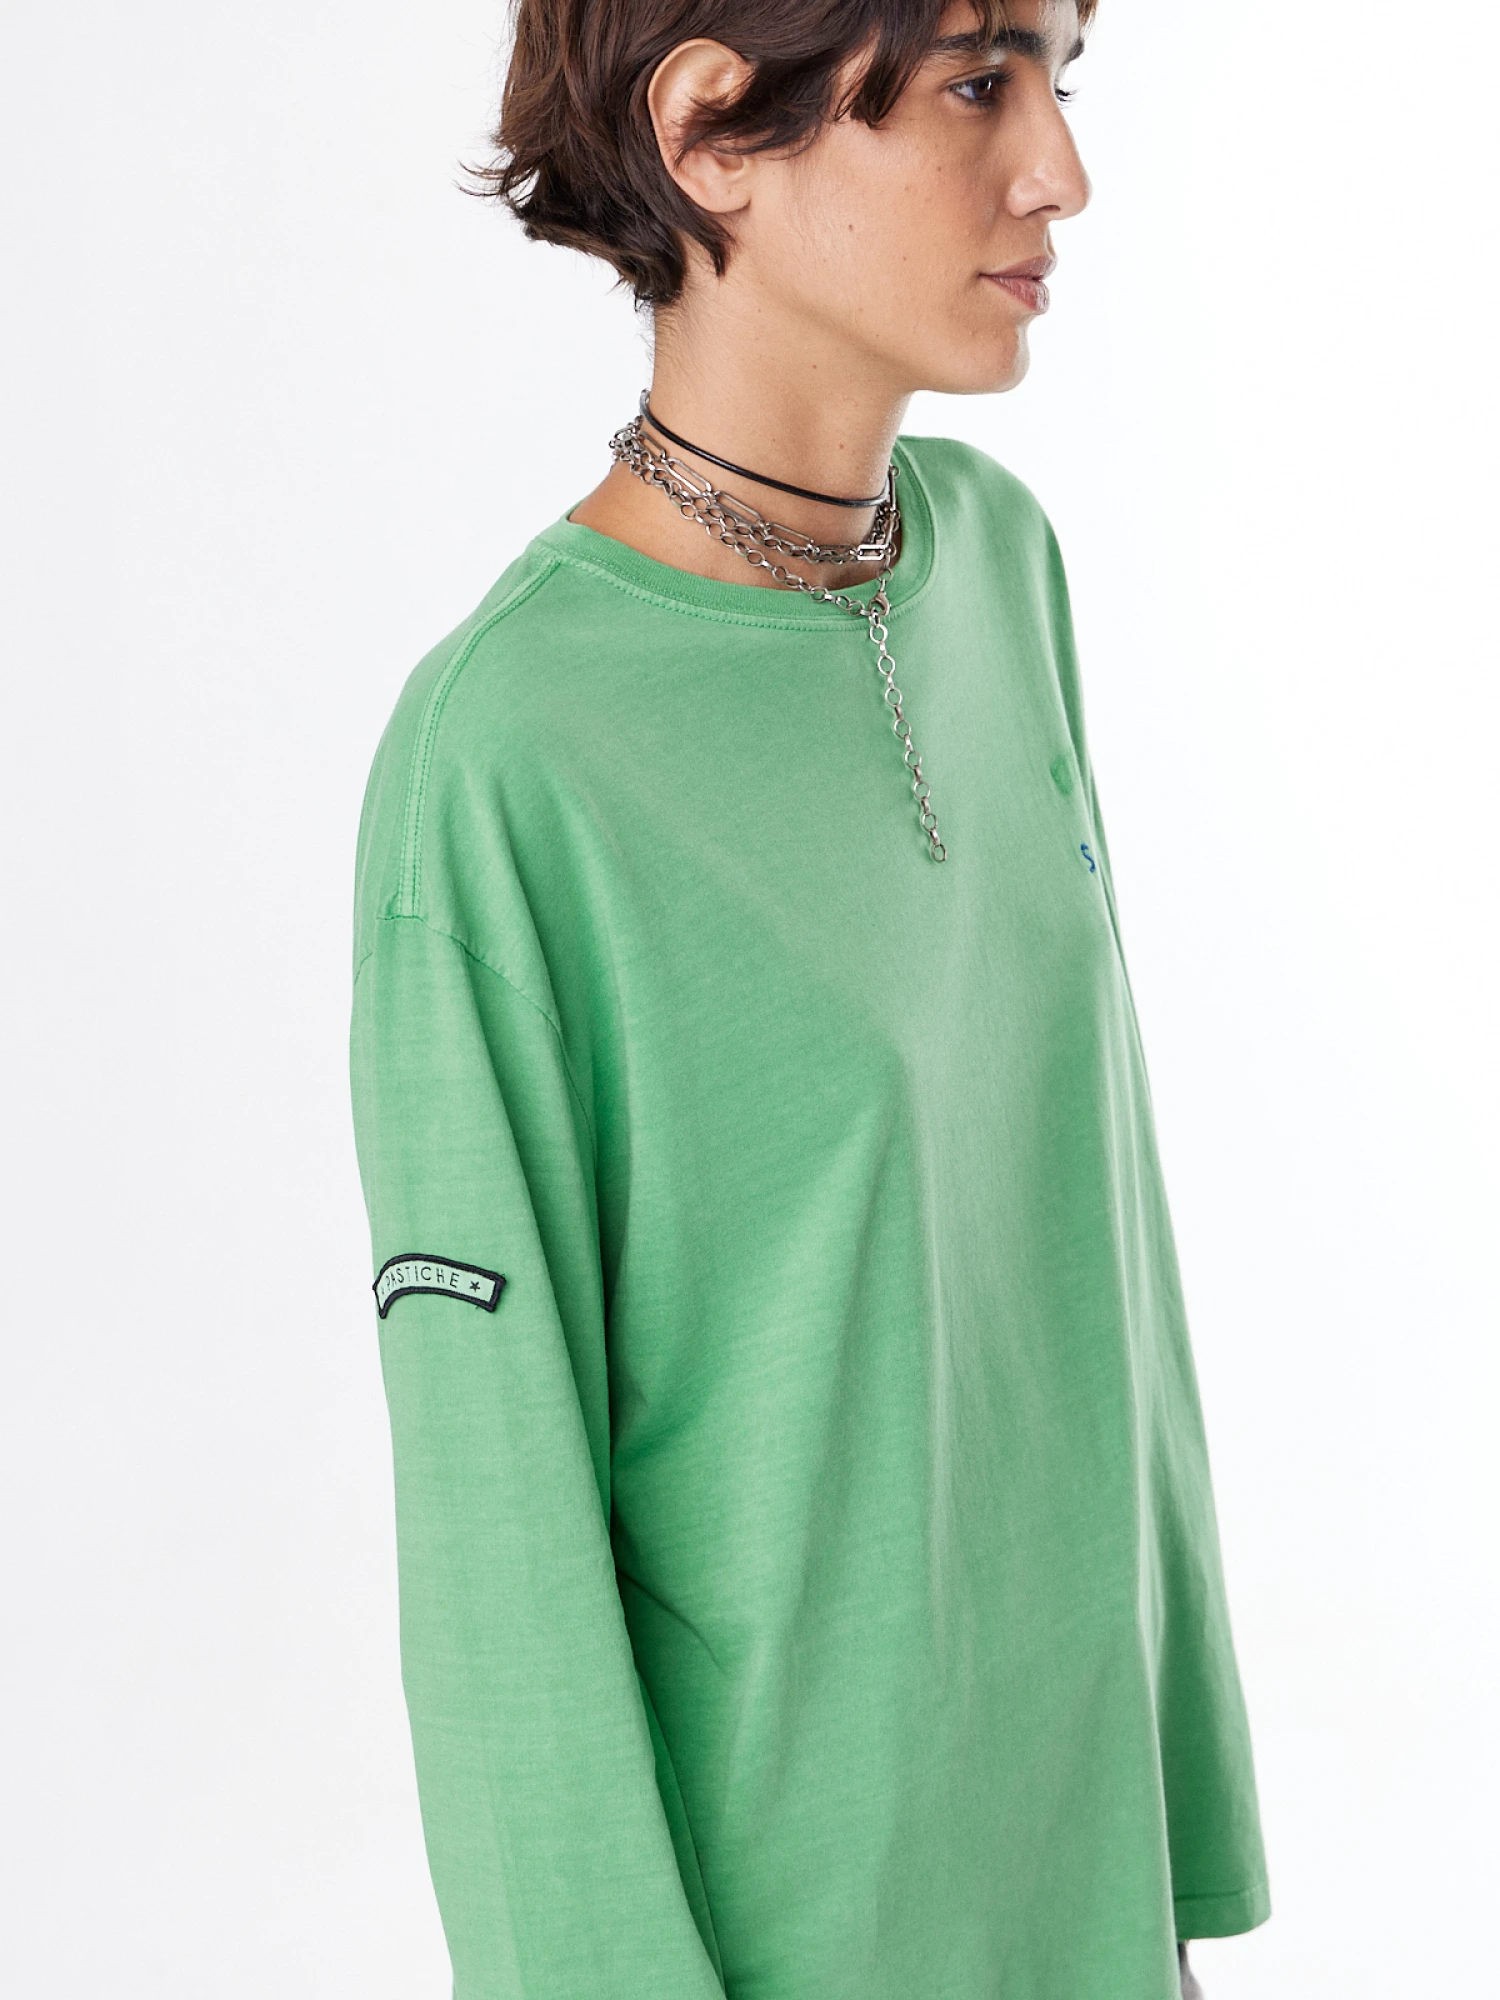 T-shirt Prince verde m